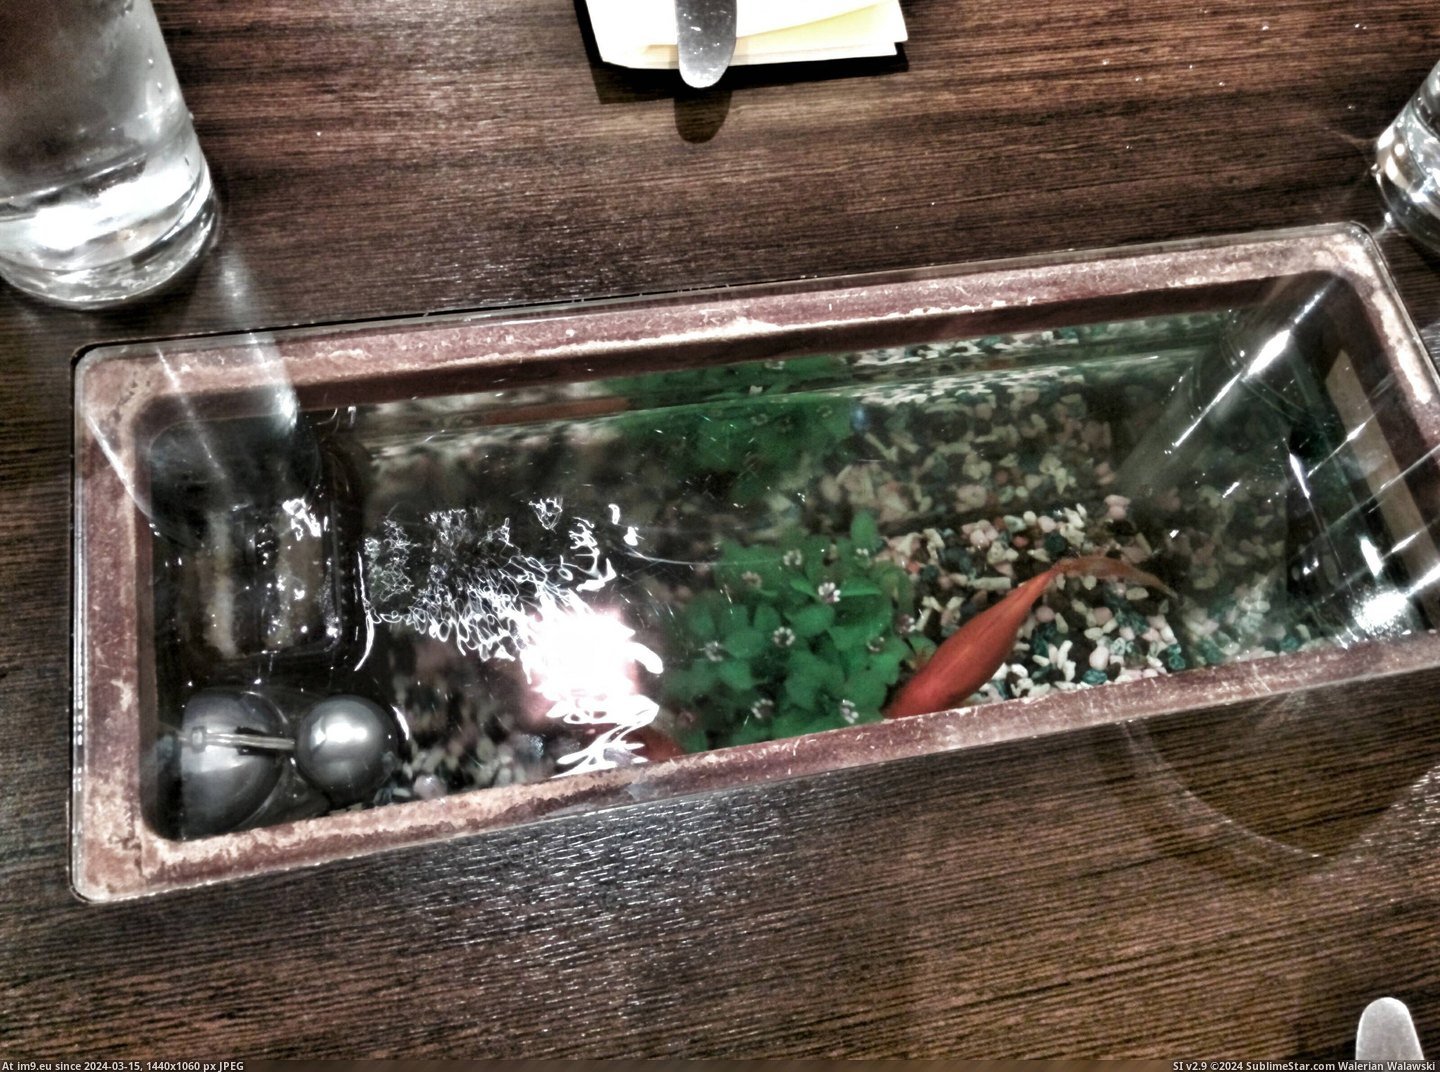 #Bowl #Restaurant #Tables #Fish [Mildlyinteresting] The tables in this restaurant have a fish bowl in the middle of them. Pic. (Image of album My r/MILDLYINTERESTING favs))